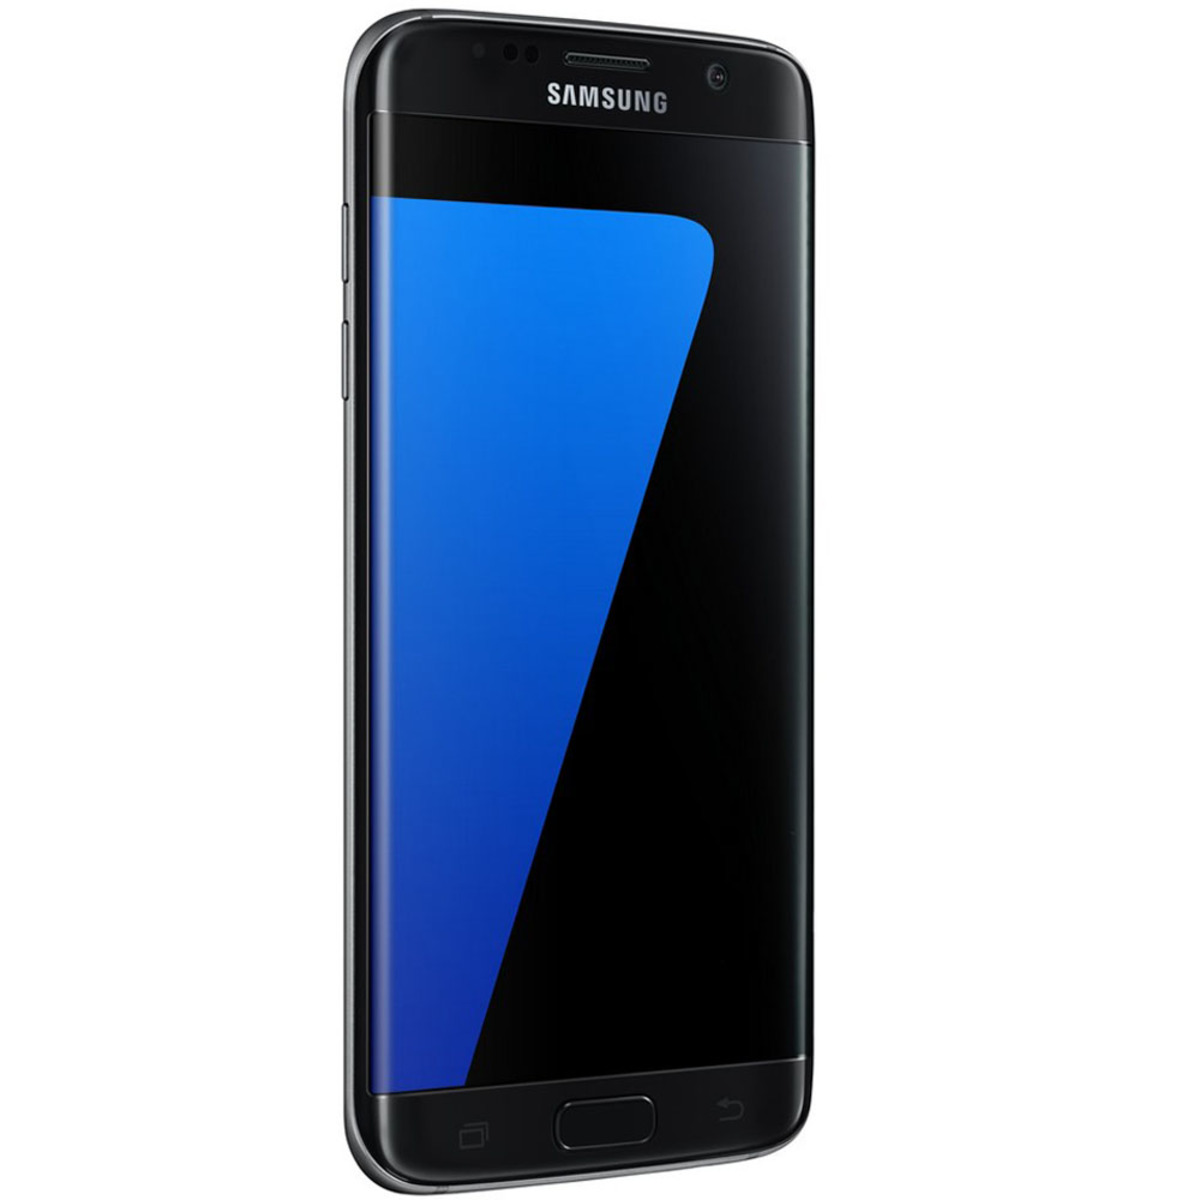 Ga lekker liggen Hoofd bonen Samsung Galaxy S7 Edge SMG935FD 32GB Black Online at Best Price | Smart  Phones | Lulu KSA